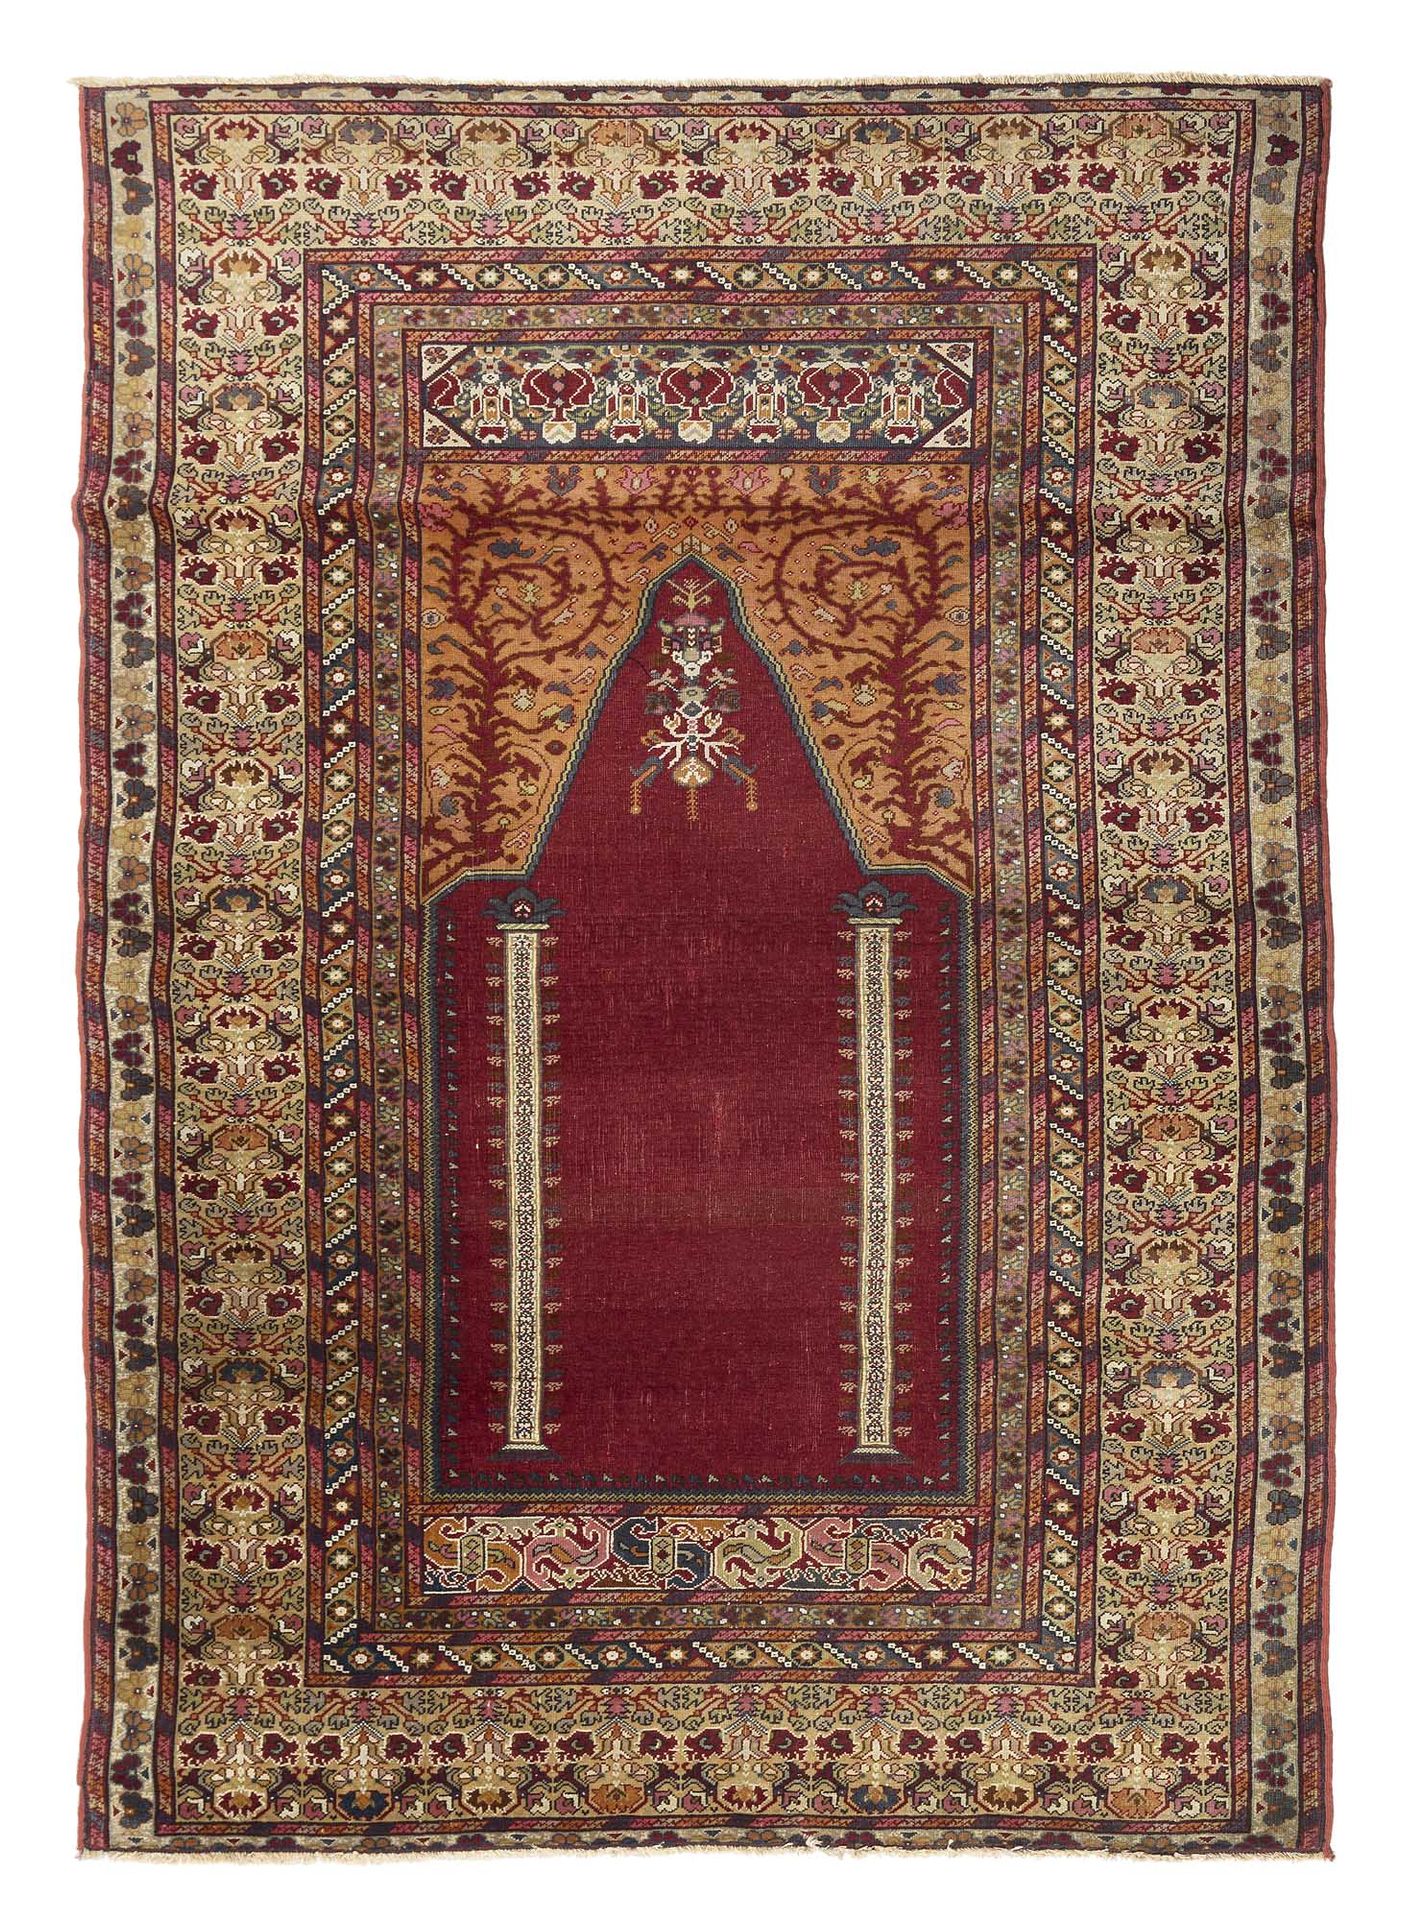 Null PANDERMA carpet (Asia Minor), late 19th century

Dimensions : 185 x 125cm

&hellip;